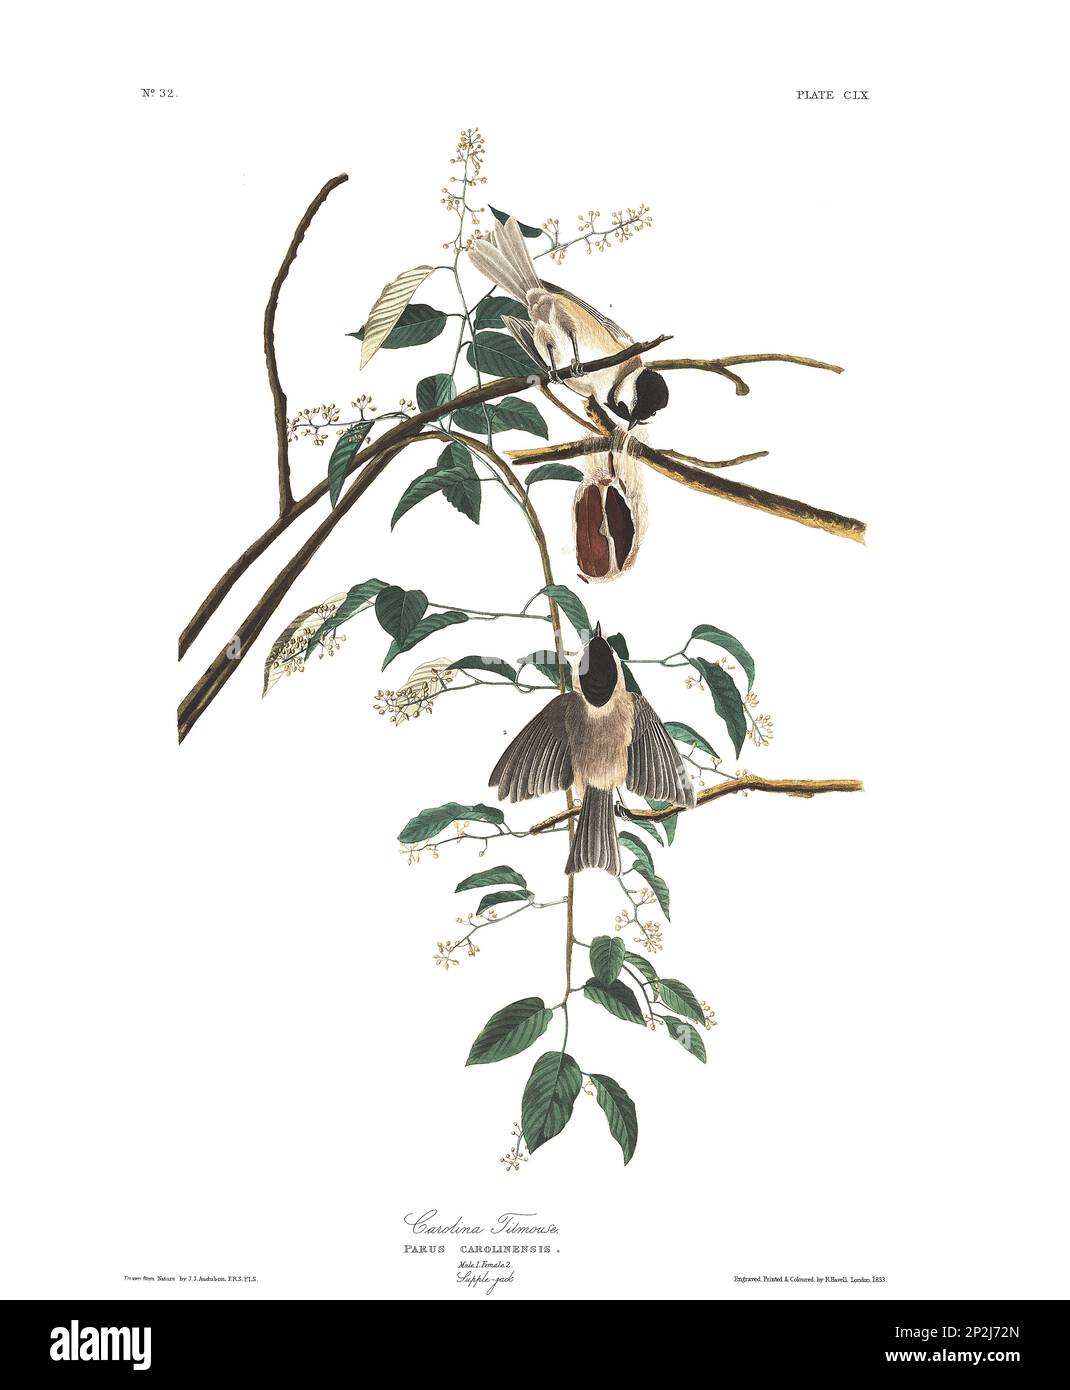 Titmouse. Illustrazione di uccelli da uccelli d'America di John James Audubon- 1860 Foto Stock